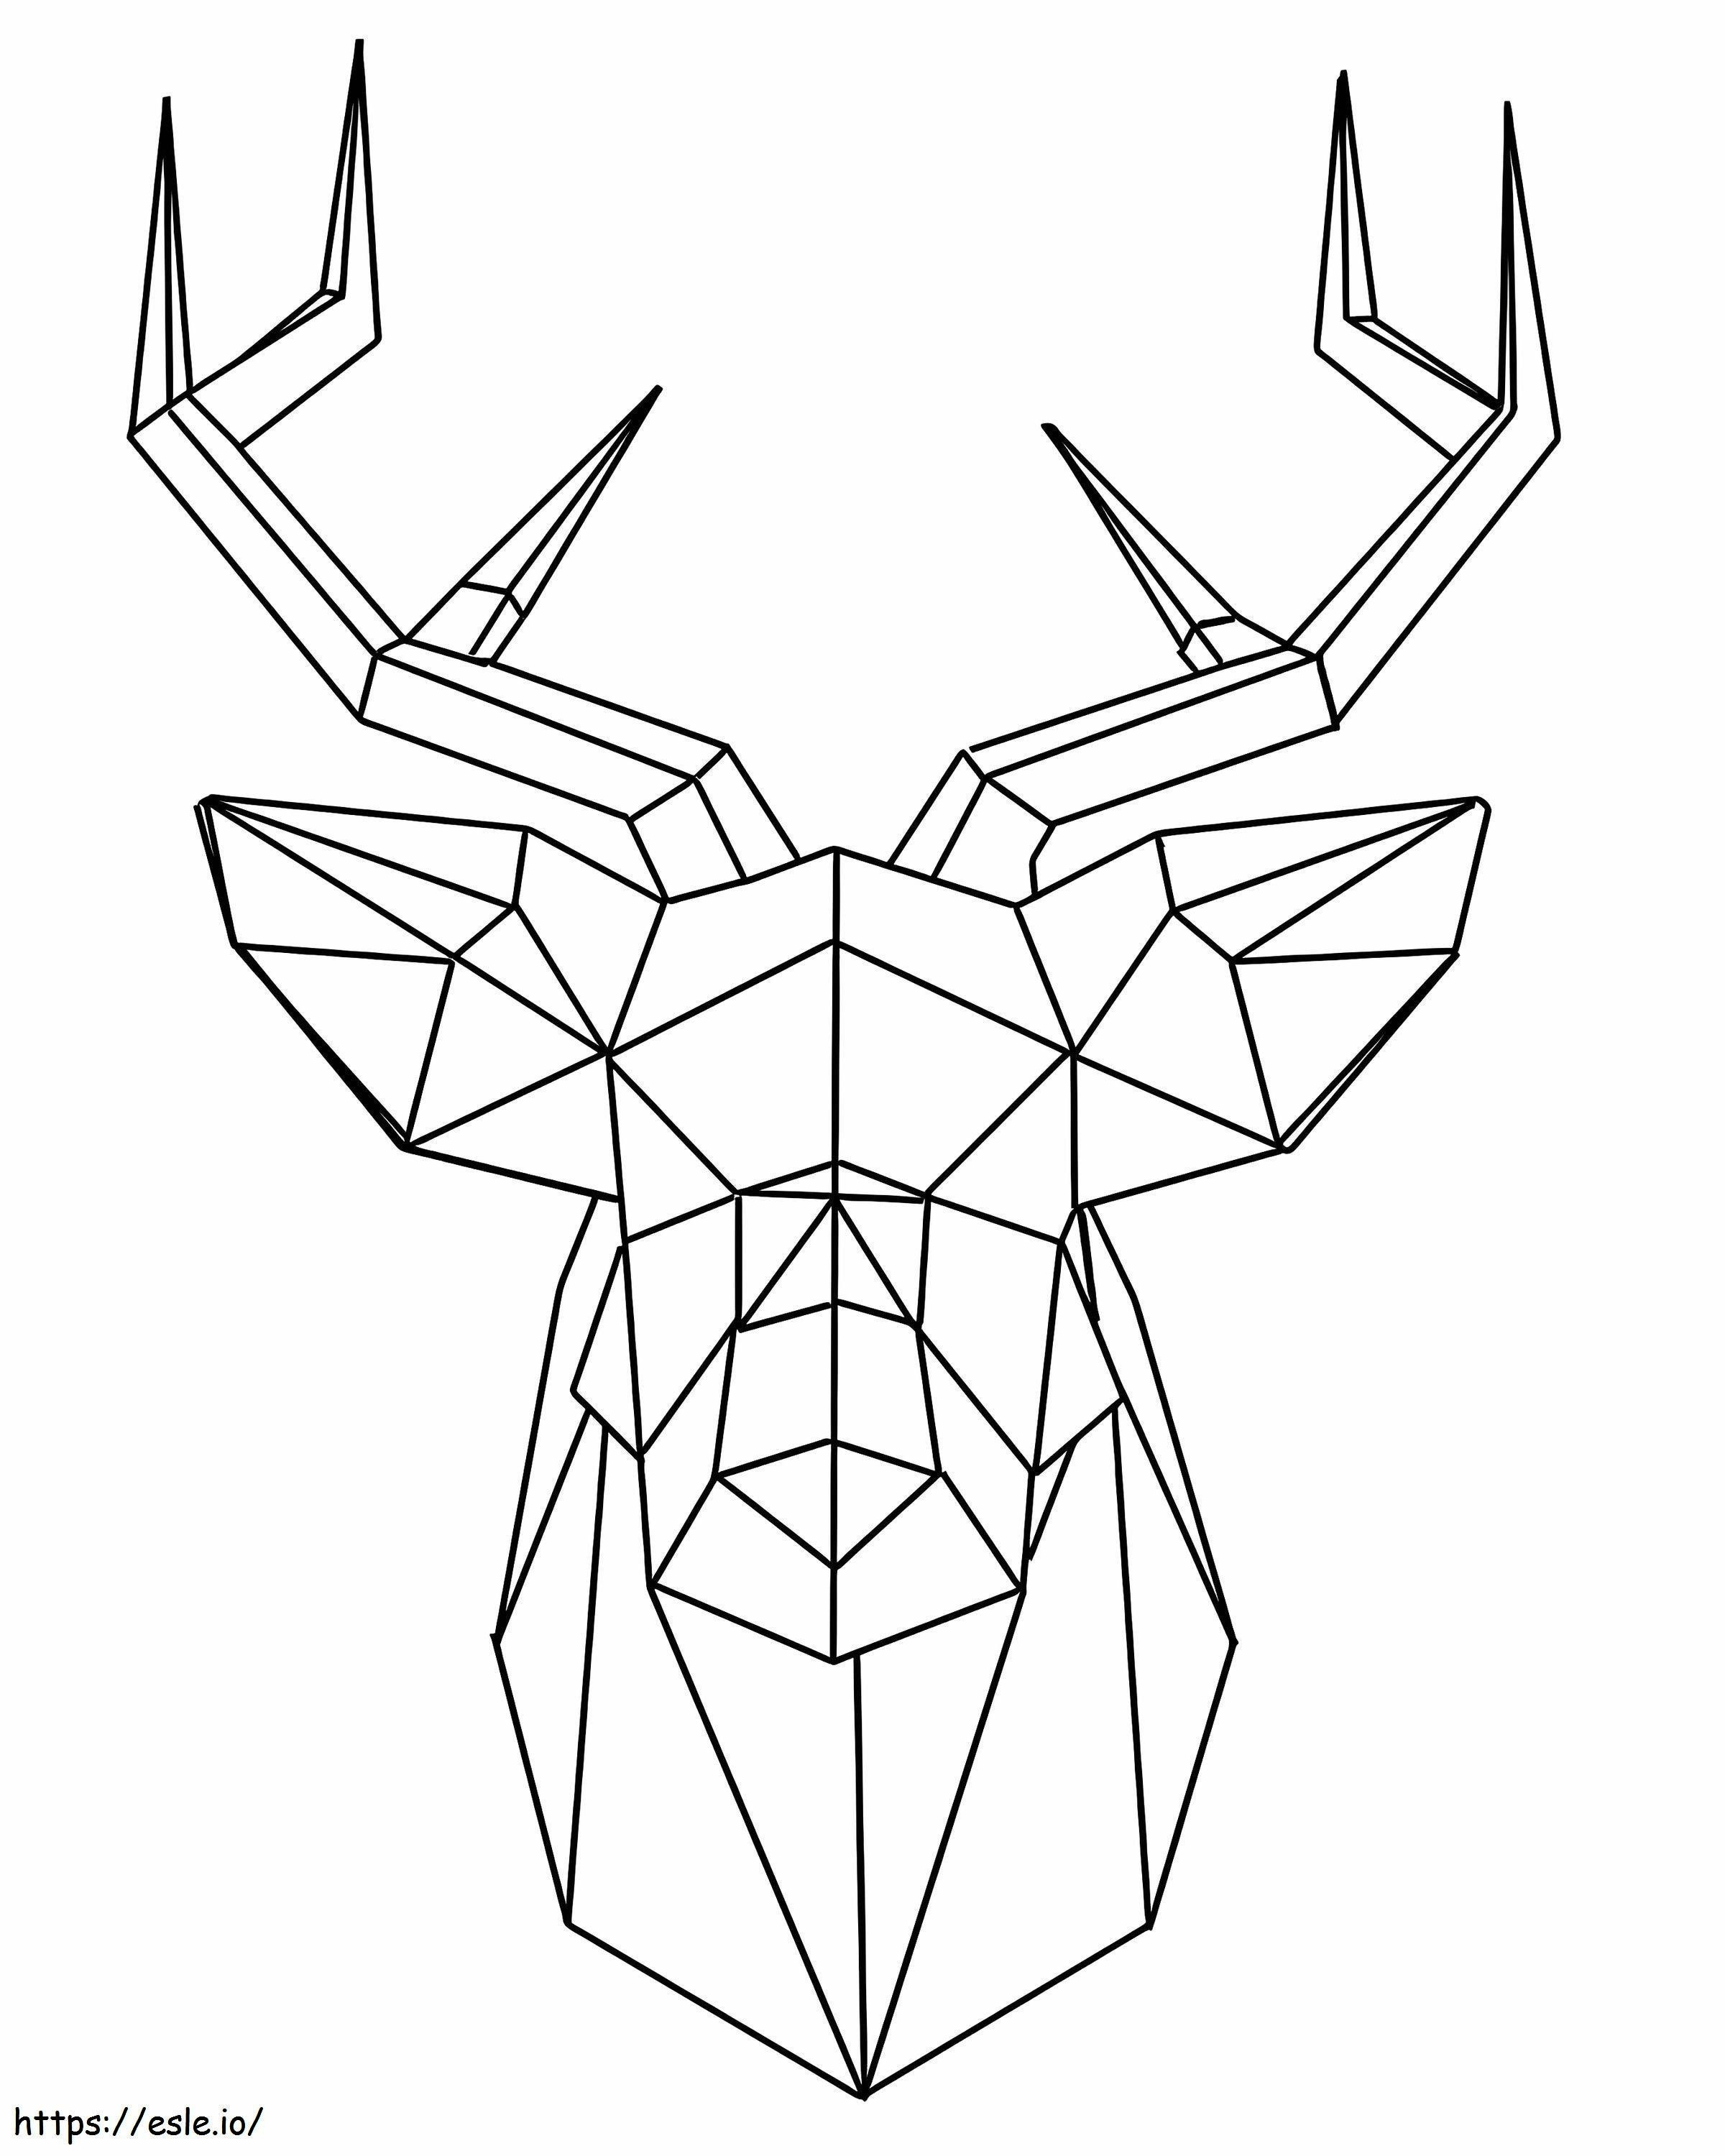 Origami Deer coloring page